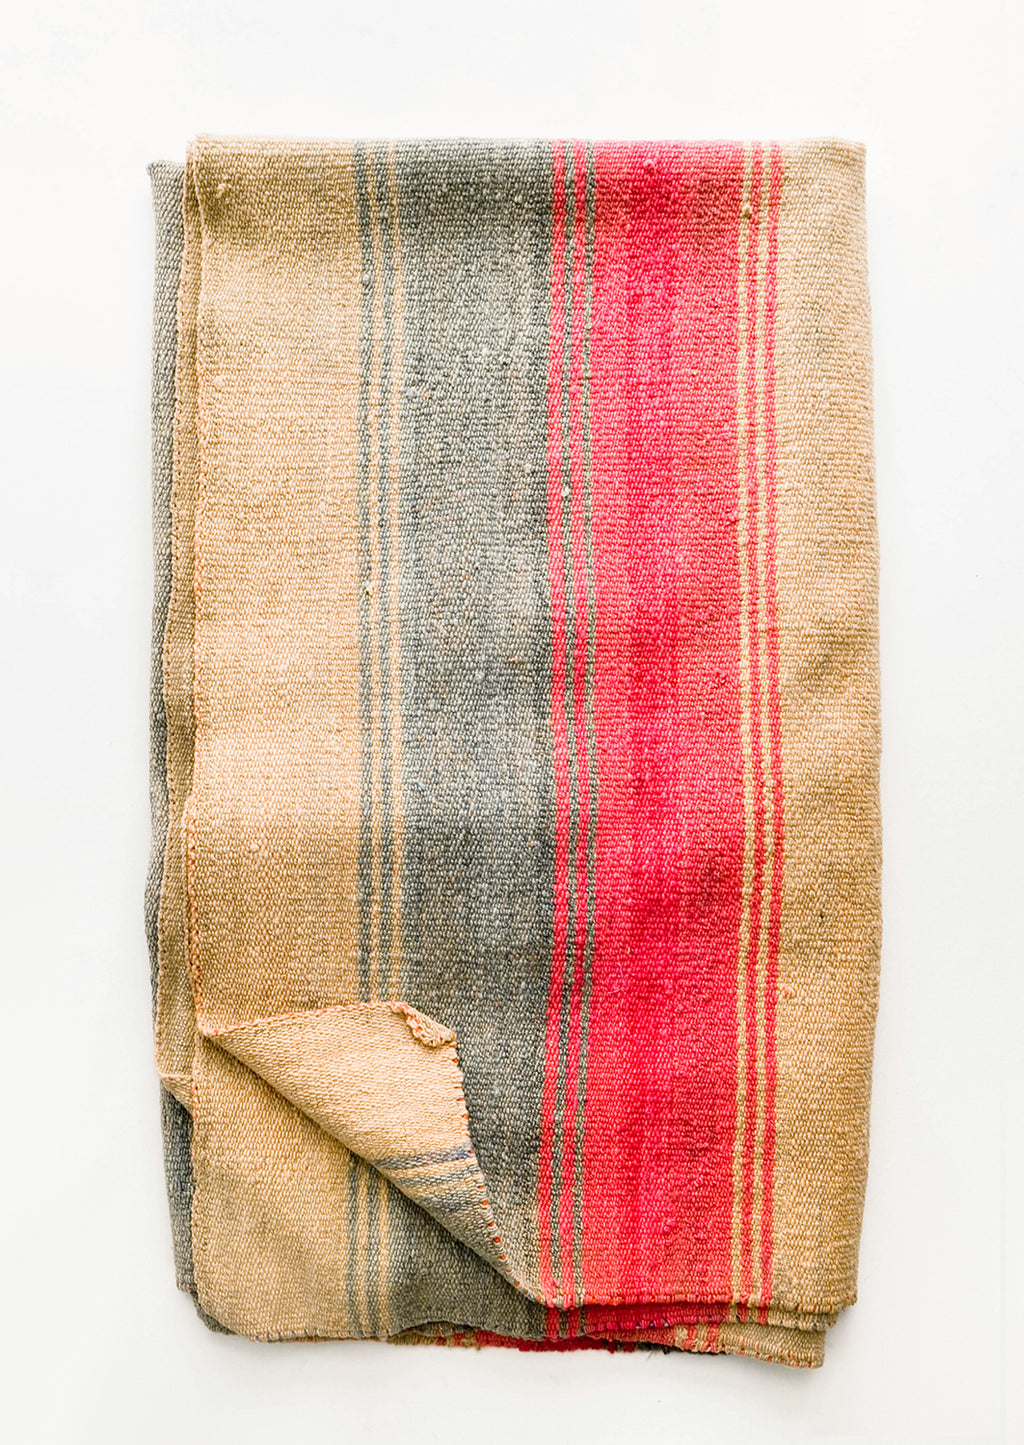 1: Vintage wool textile in tan, pink & mint striped pattern